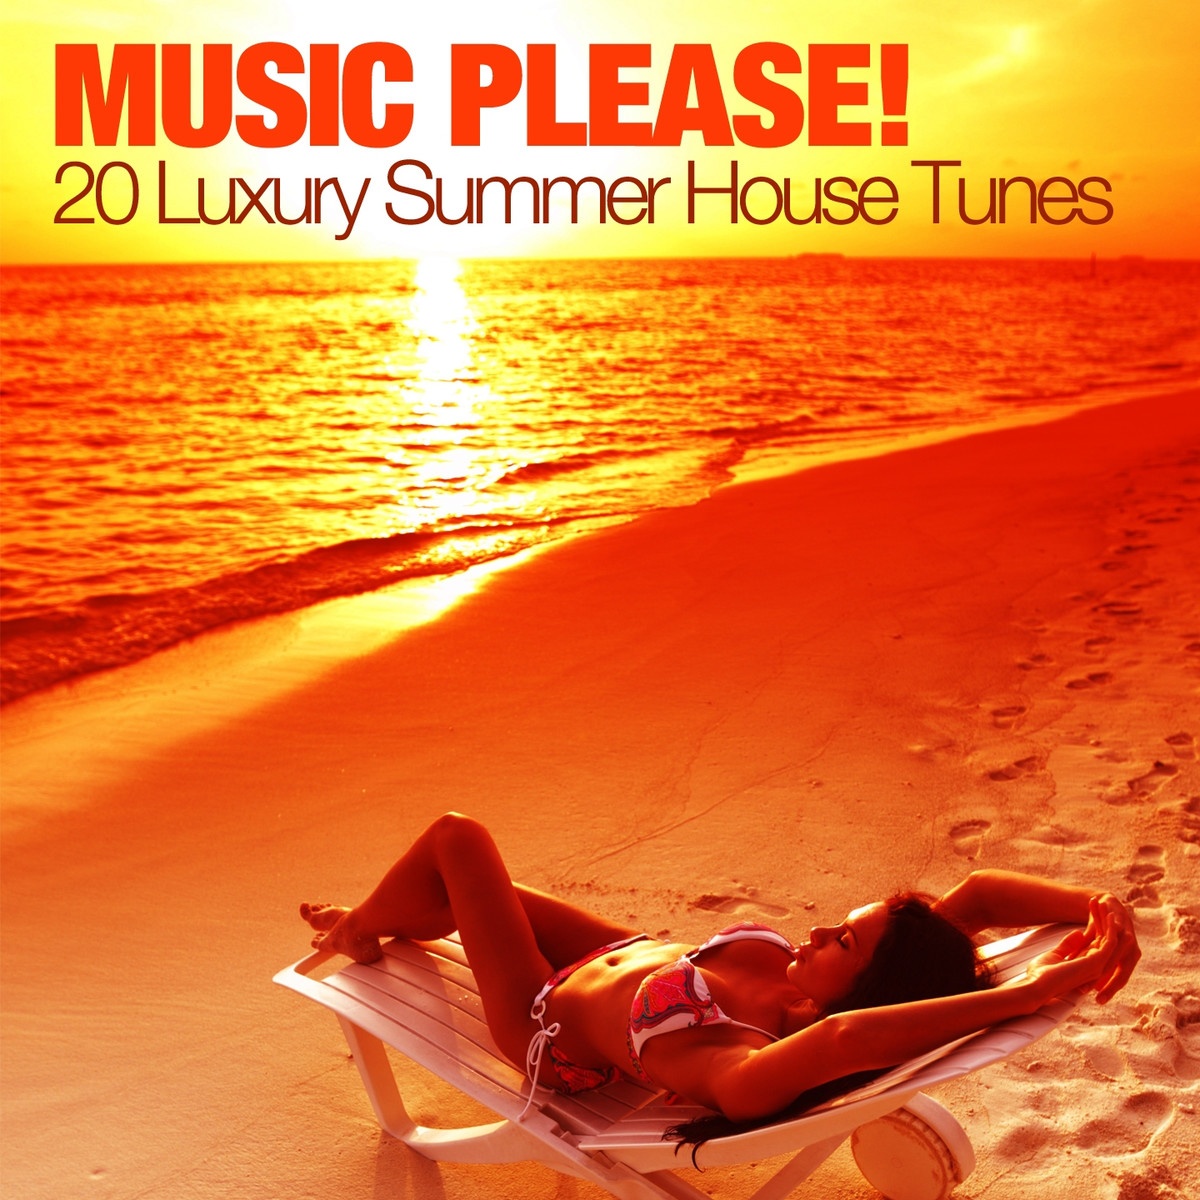 Music Please! 20 Luxury Summer House Tunes